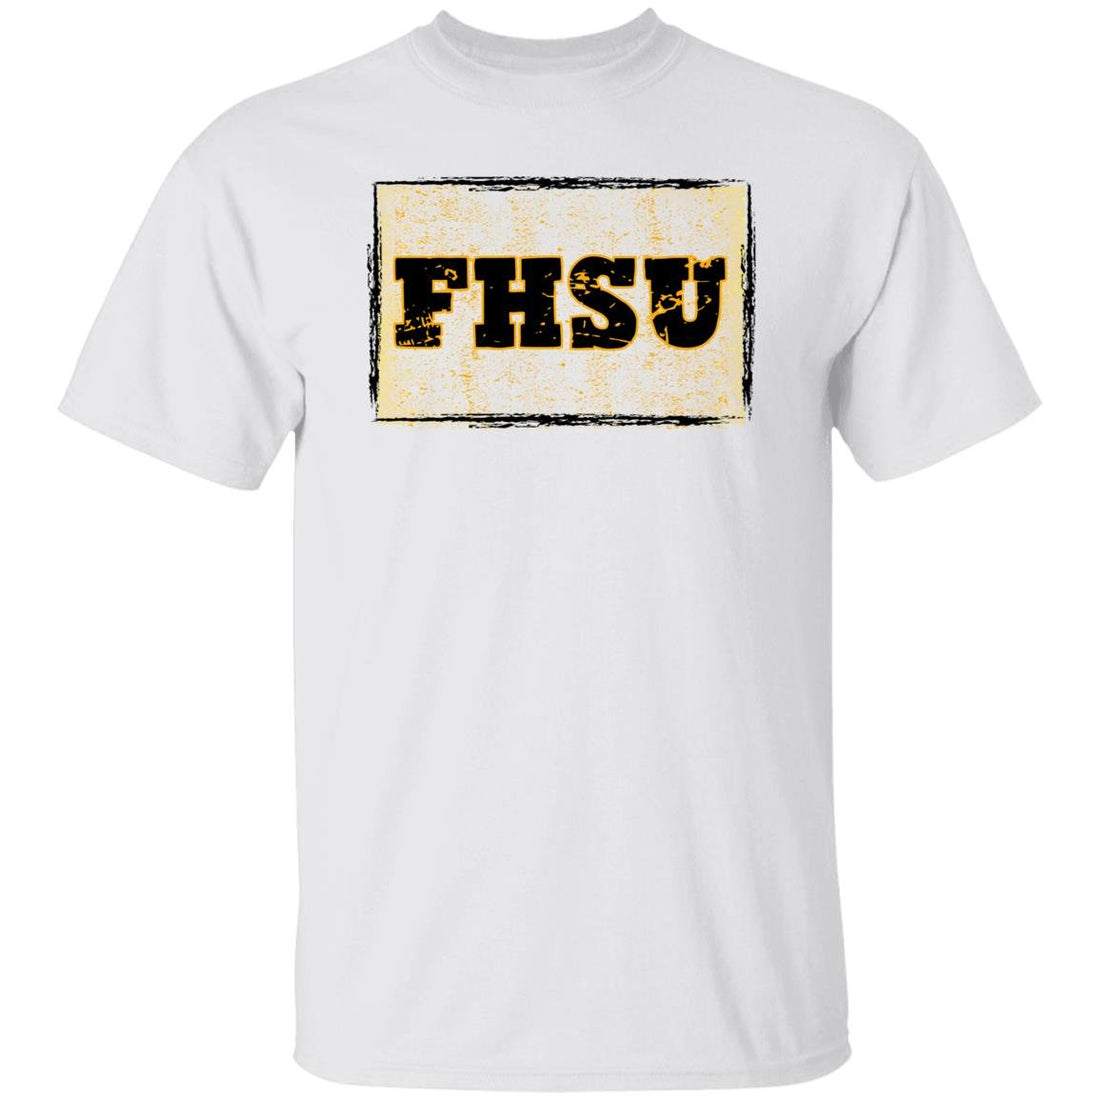 FHSU Vintage T-Shirt - T-Shirts - Positively Sassy - FHSU Vintage T-Shirt